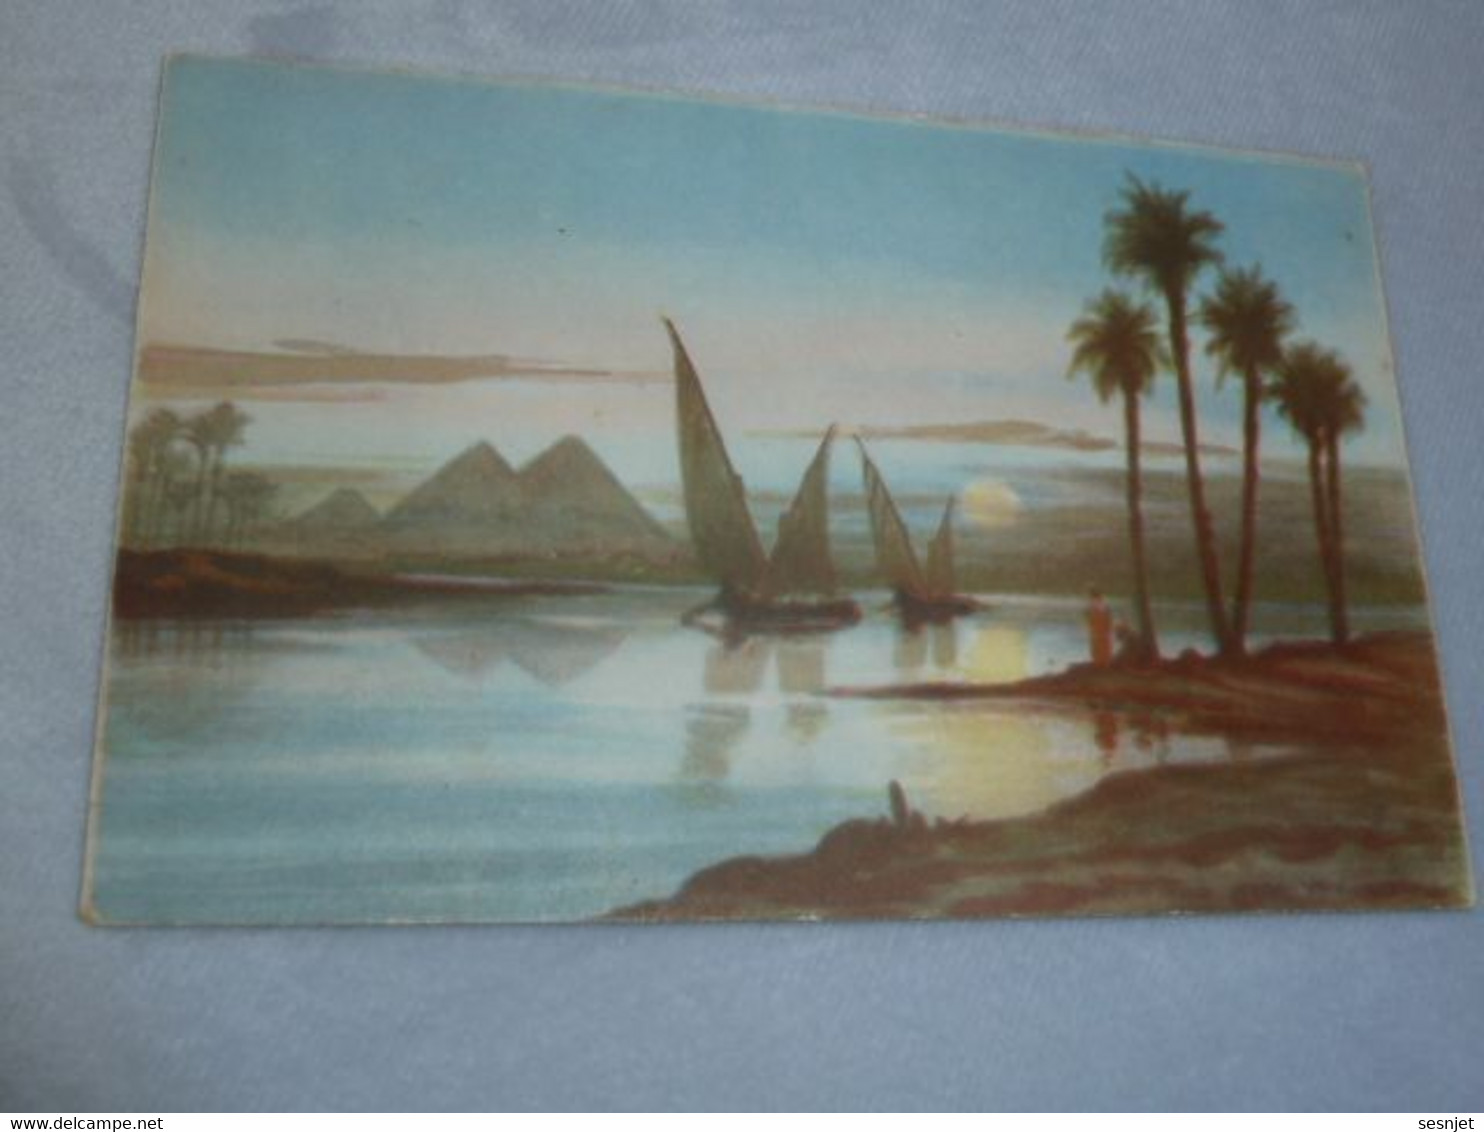 Le Caire - Pyramids And River Nile At Moonlight - N° 5 - Editions Papazoglou -Cohen - - Pyramides